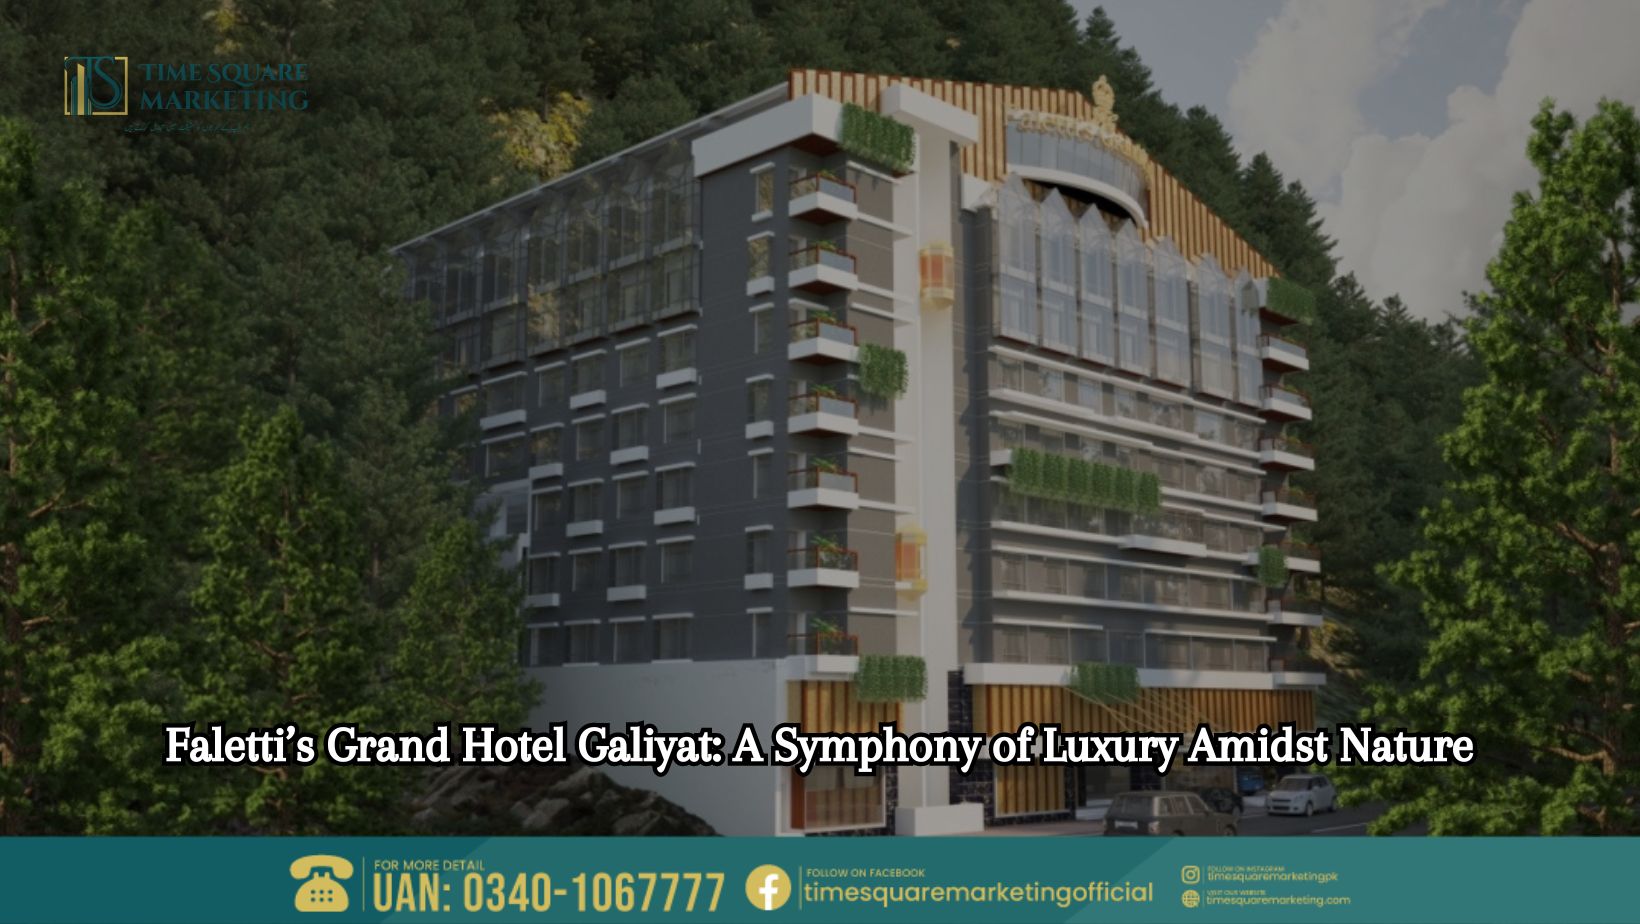 Faletti’s Grand Hotel Galiyat A Symphony of Luxury Amidst Nature